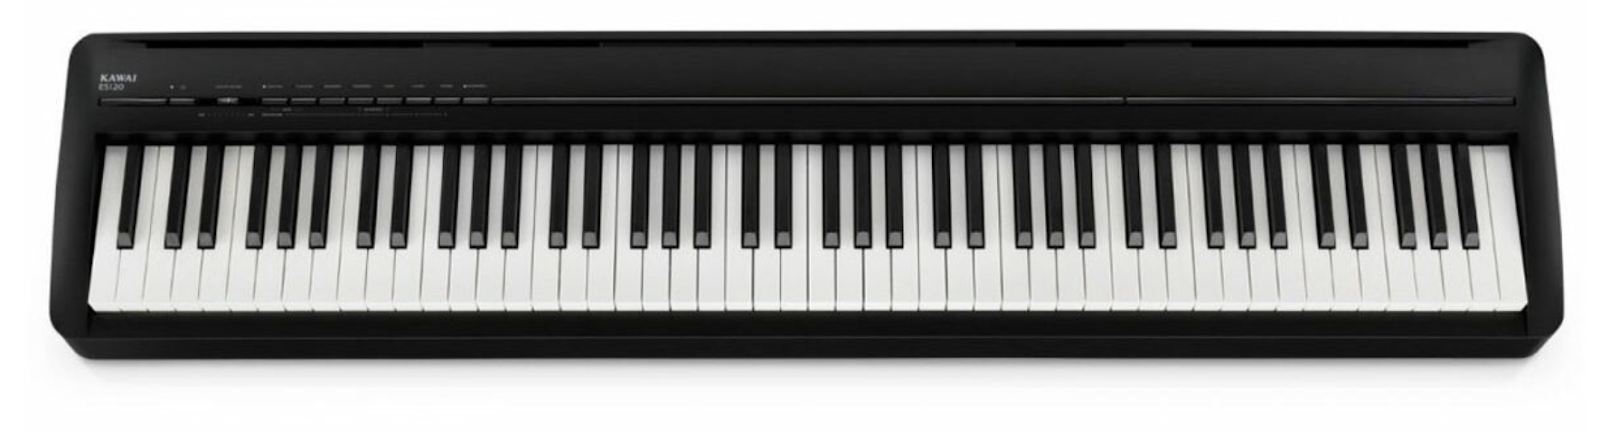 Kawai ES120 digital keyboard with weighted keys.